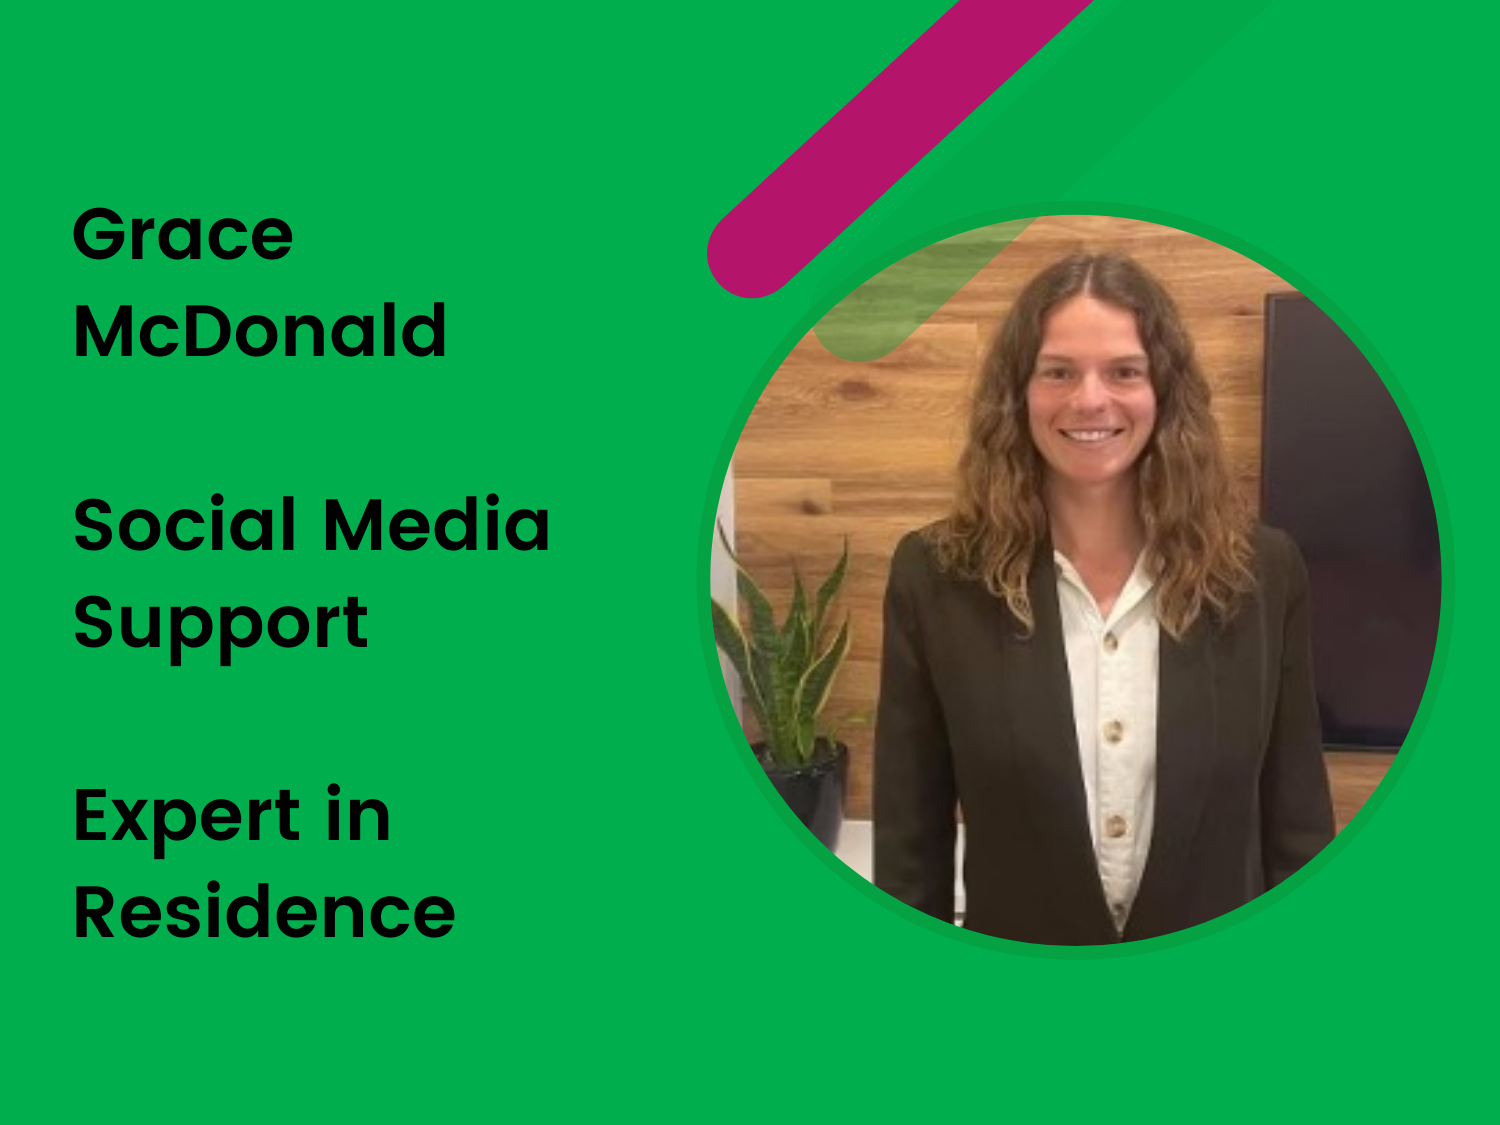 Expert in Residence - Social Media Support - Grace McDonald